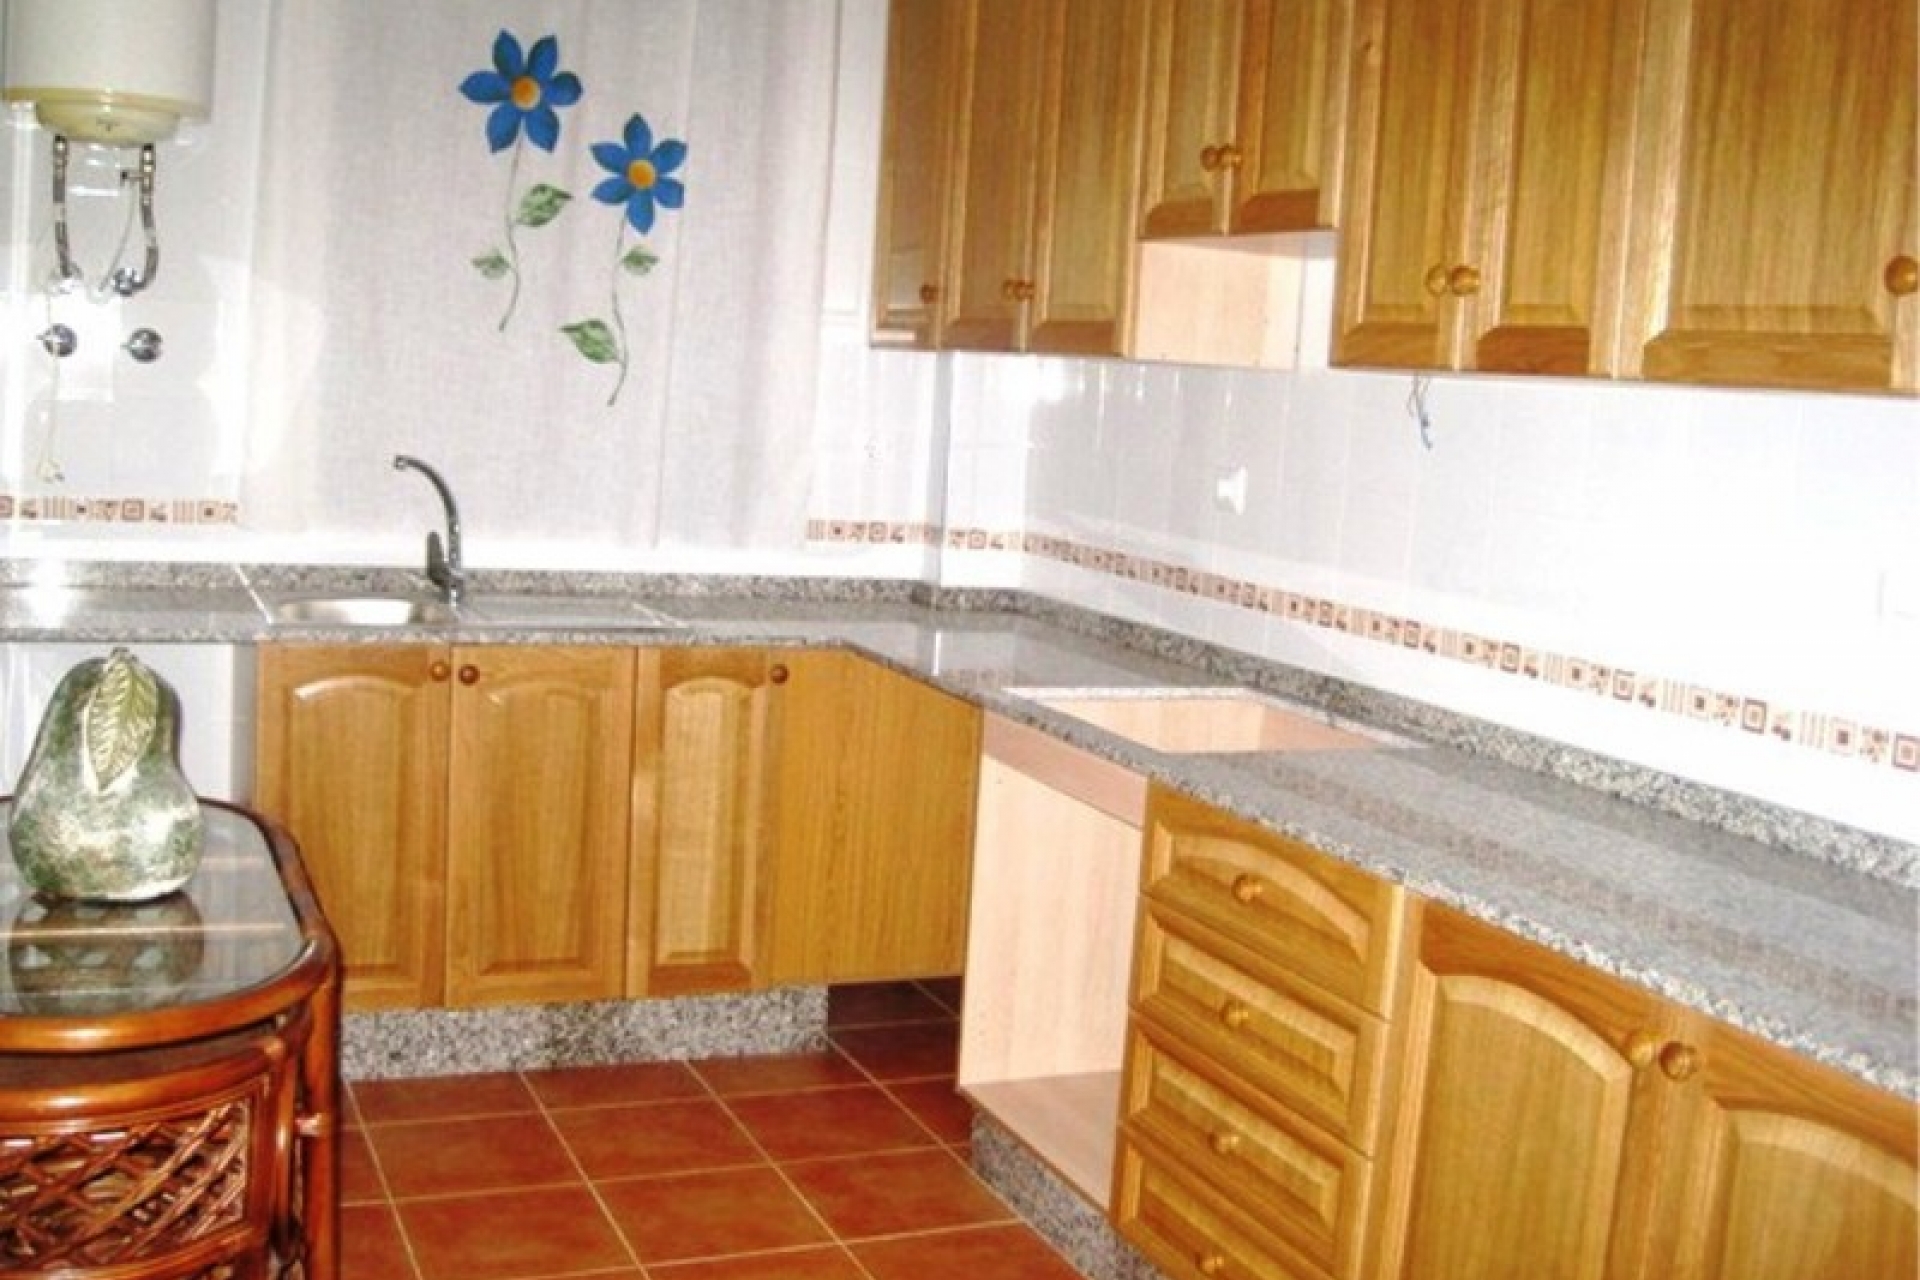 Kitchen in Calasparra Villa bargain for sale near Murcia.